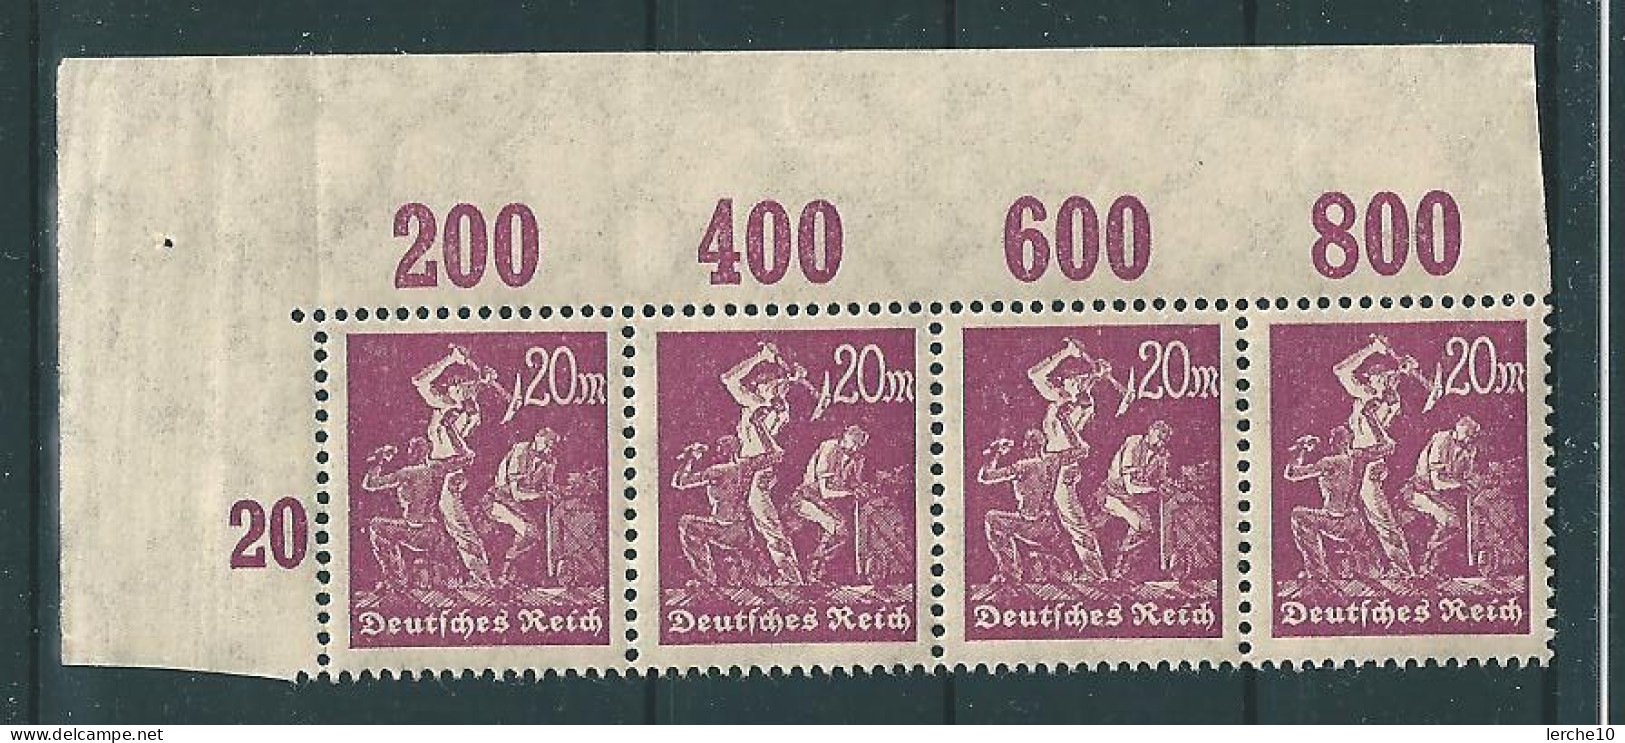 MiNr. 241 Oberrand ** (0342) - Unused Stamps